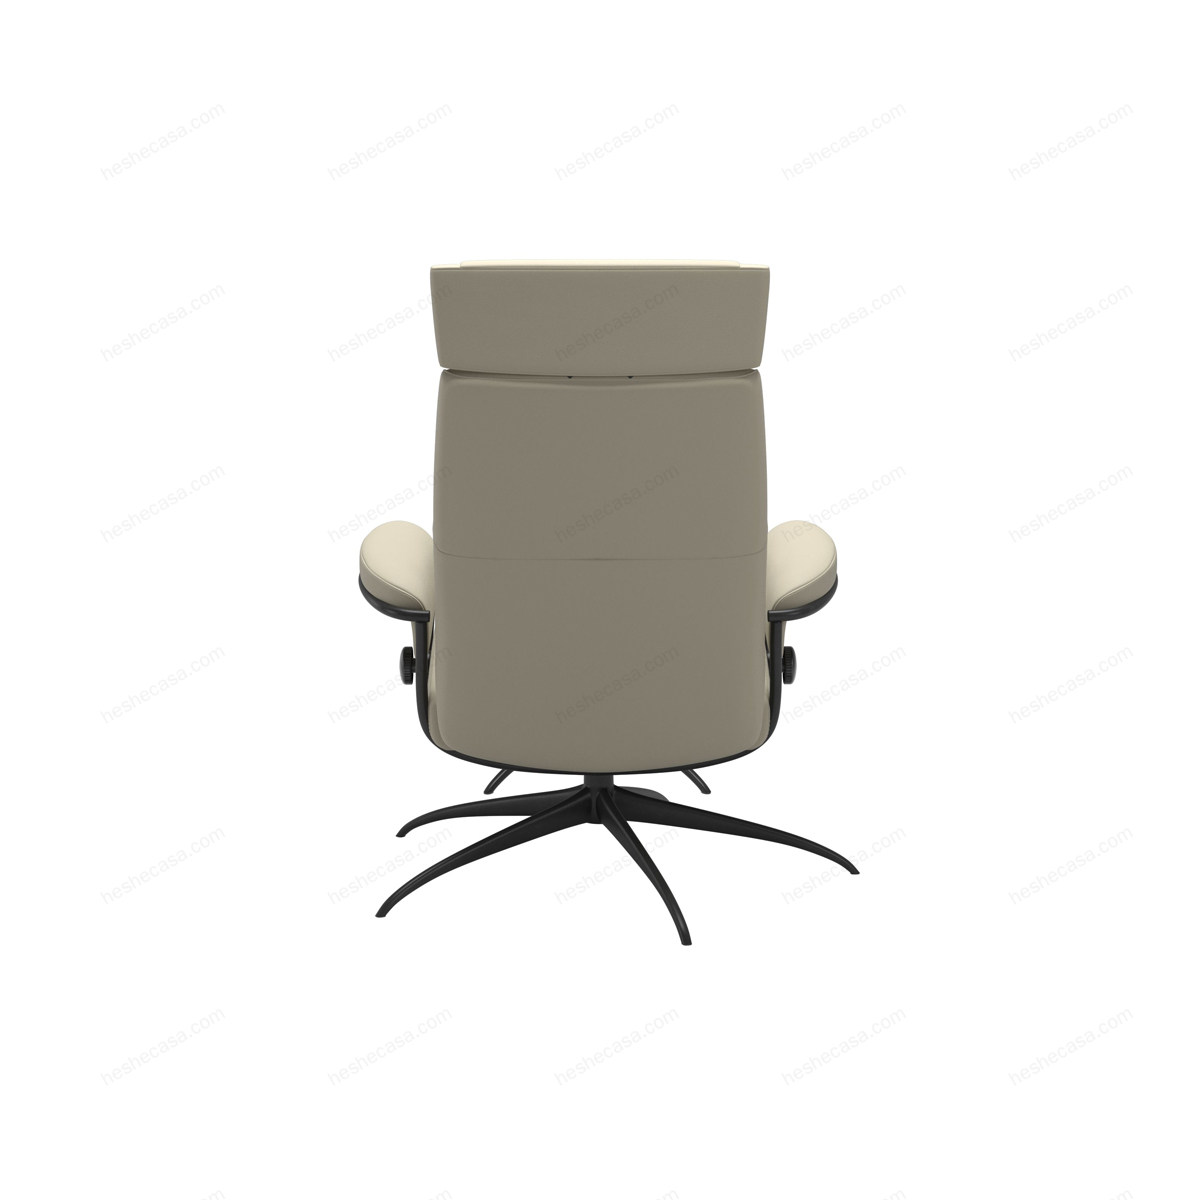 Paris Chair Adjustable Headrest扶手椅